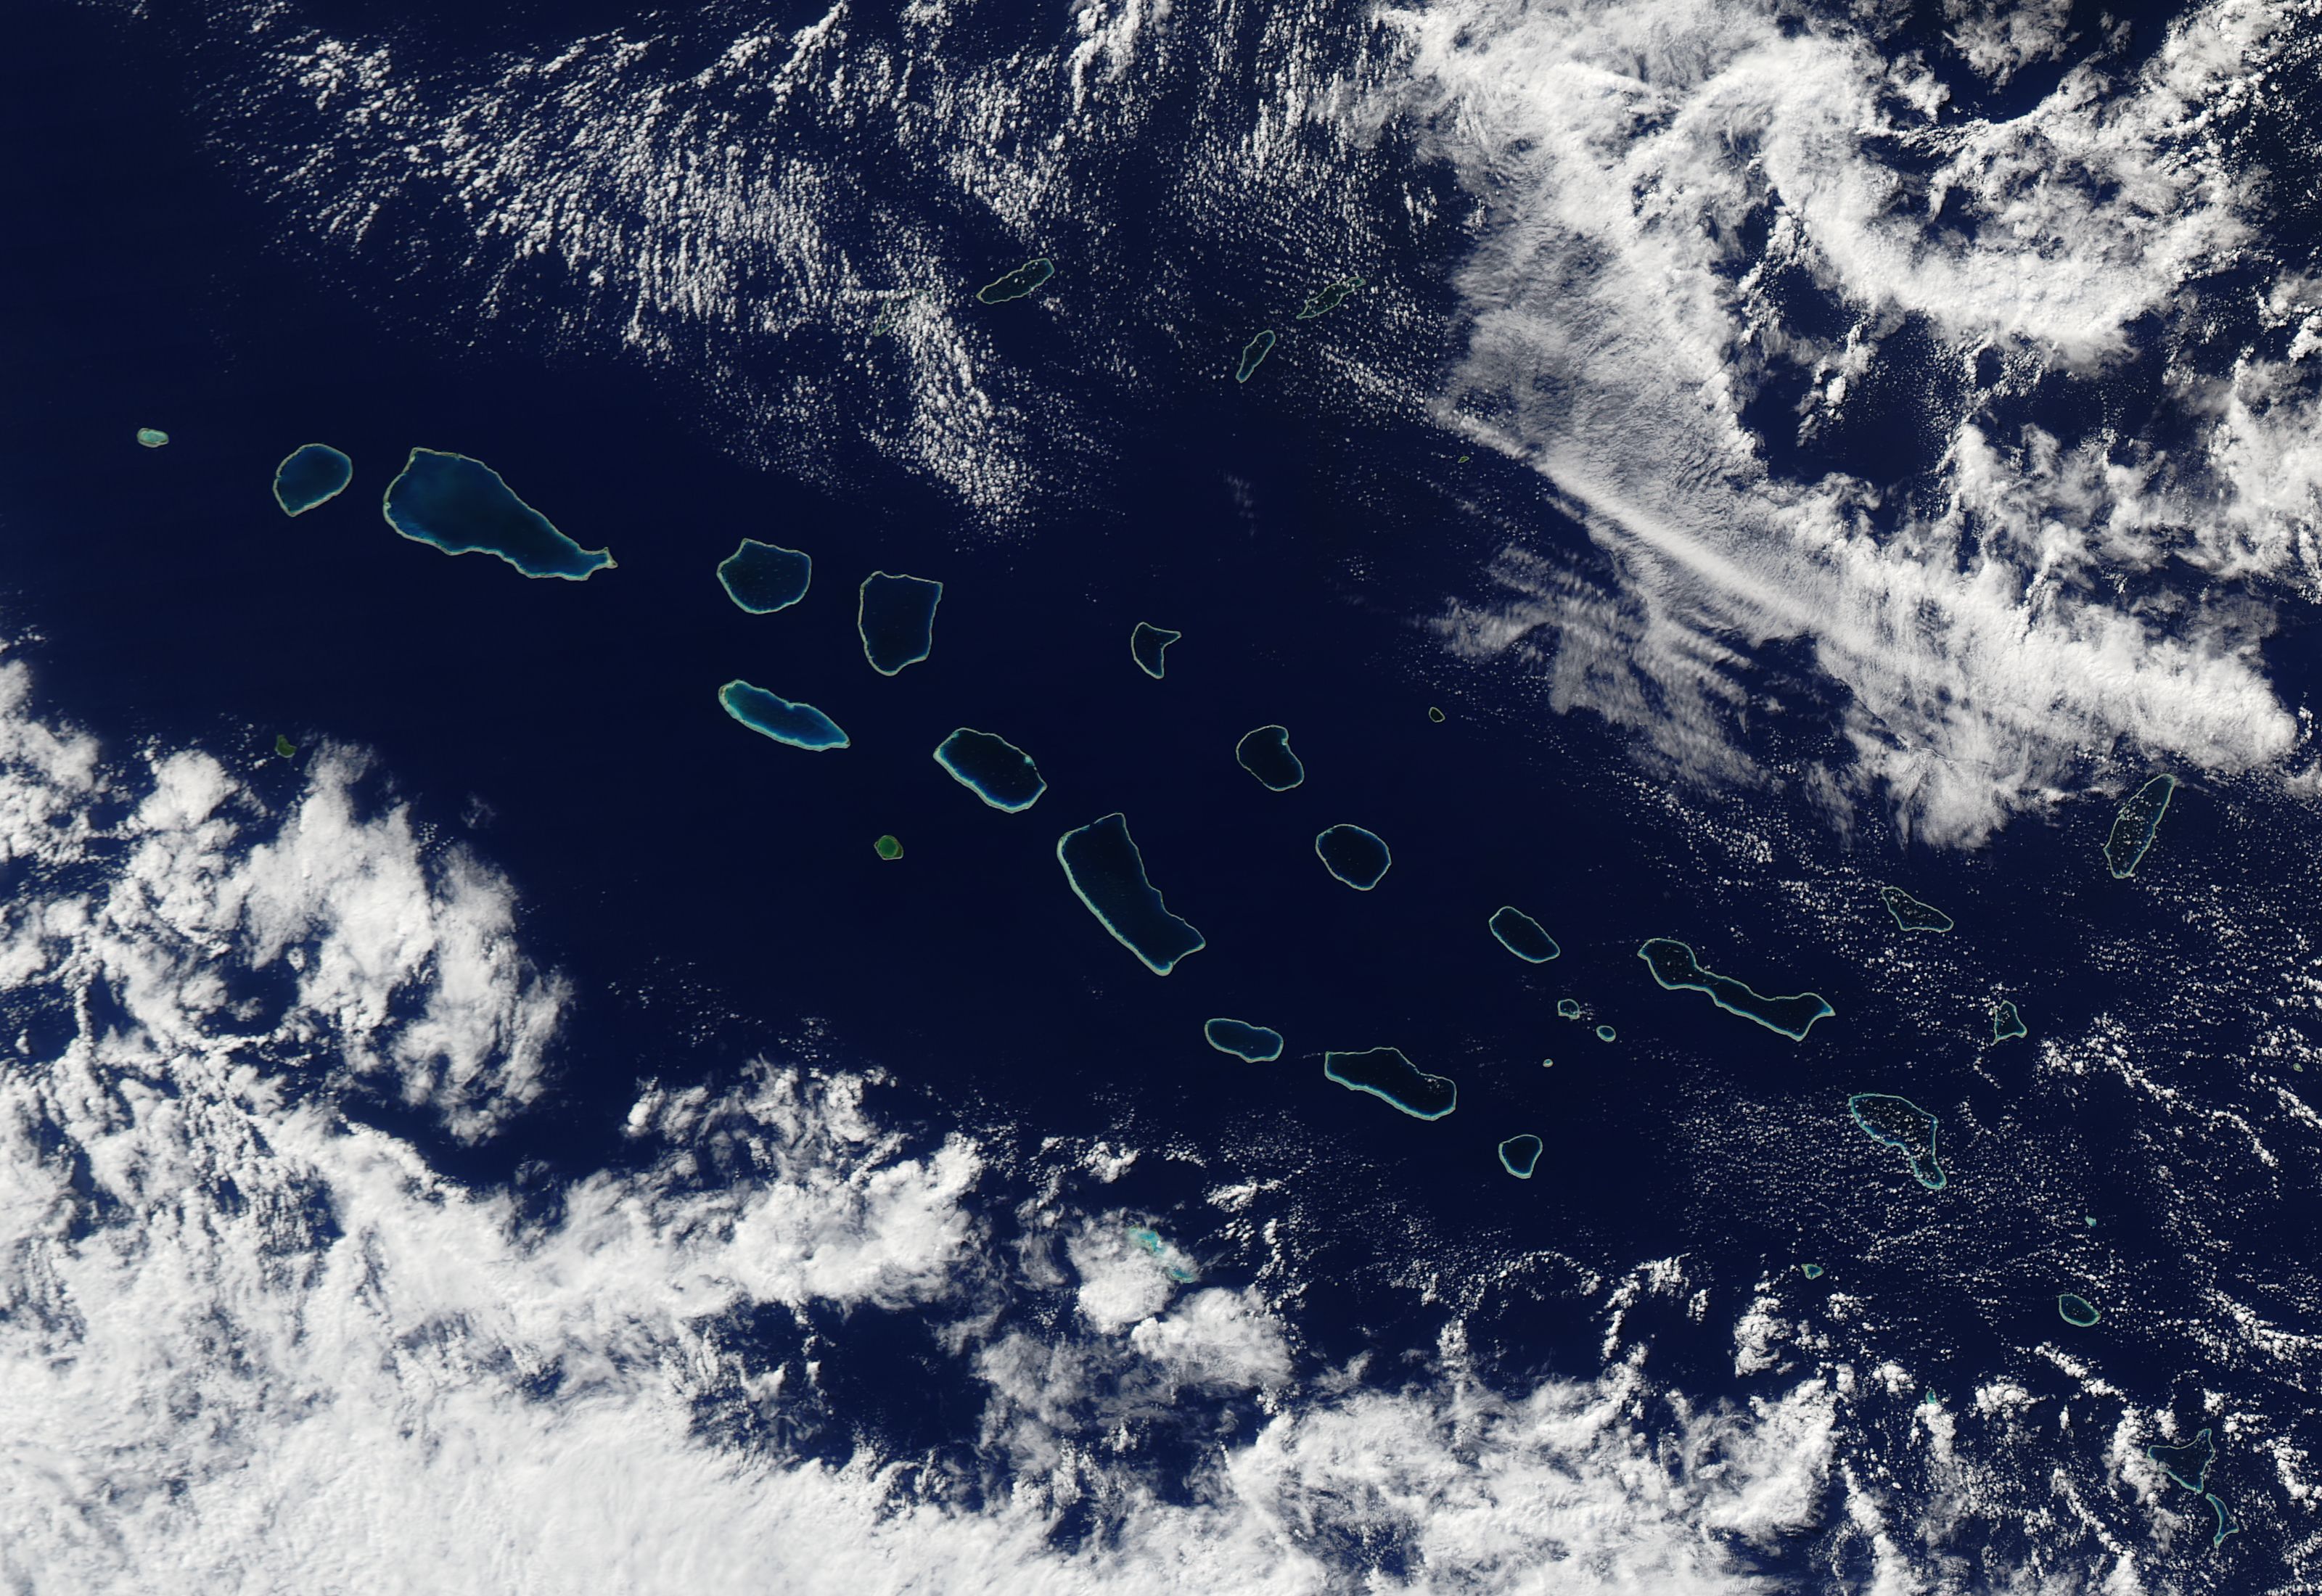 Western Tuamotu Archipelago, eastern Pacific Ocean - related image preview